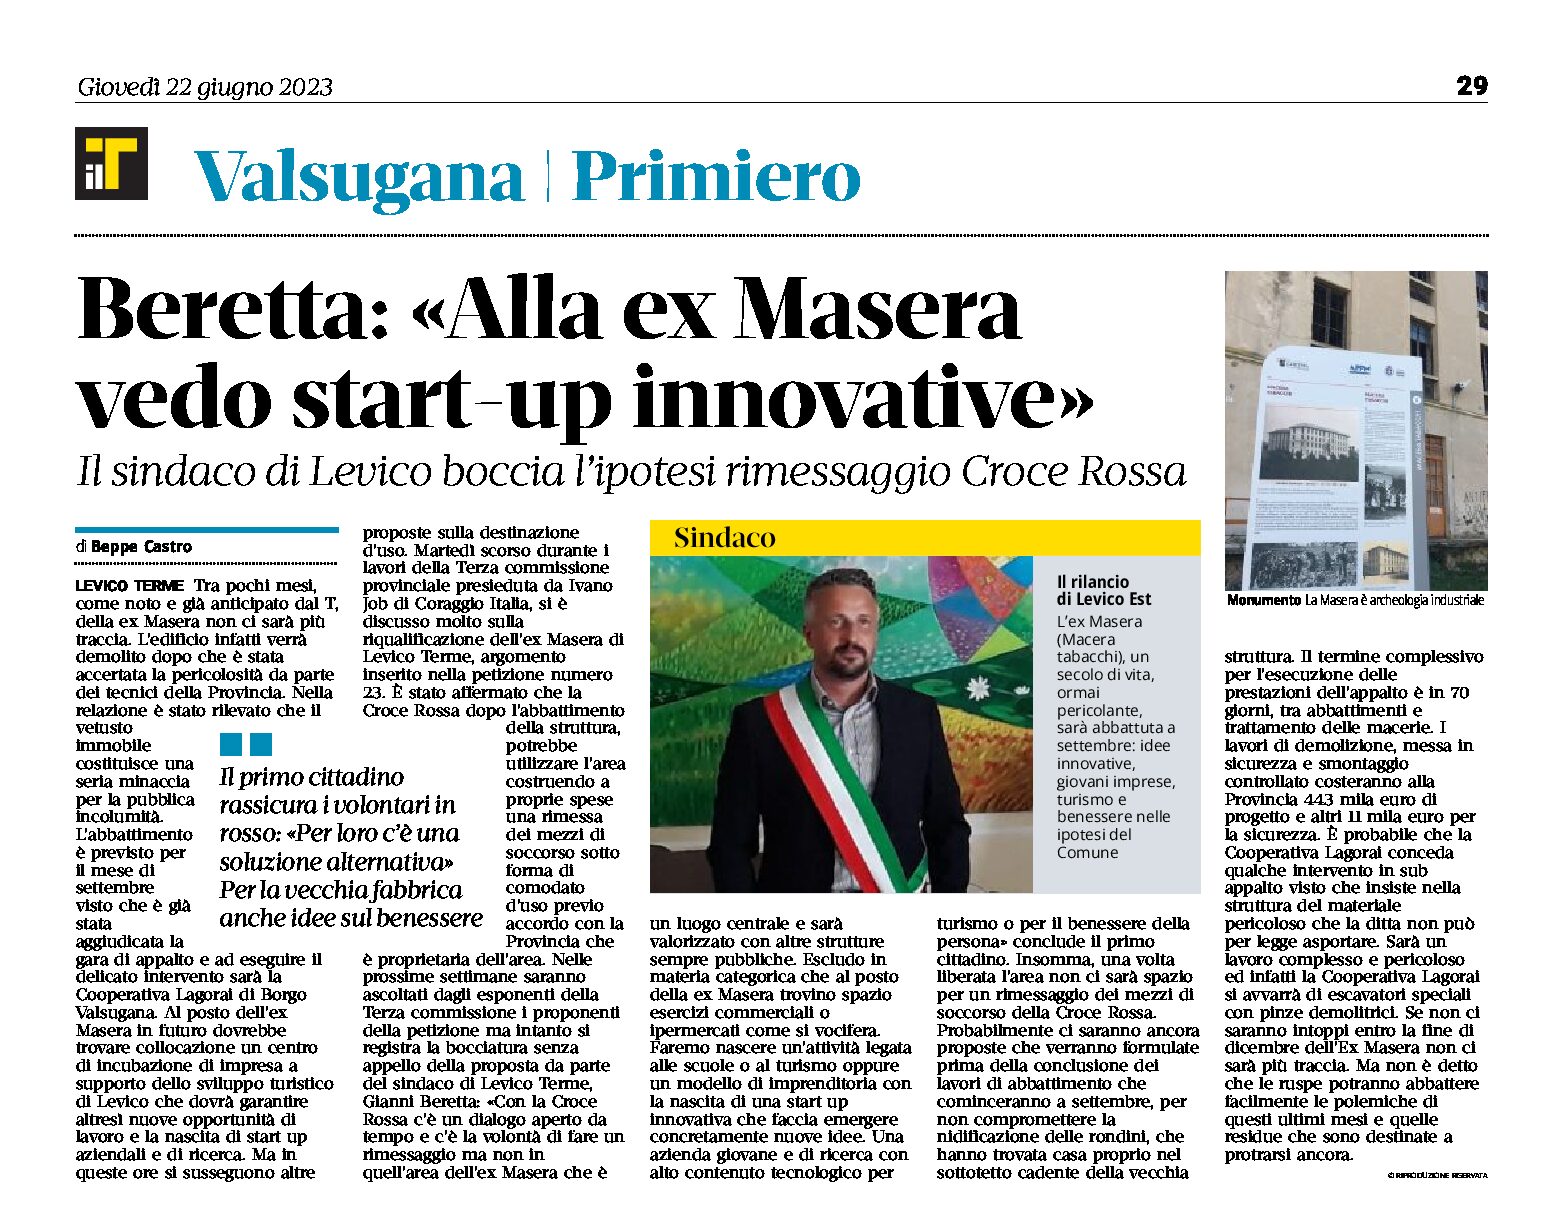 Levico: il sindaco Beretta “alla ex Masera vedo start-up innovative”